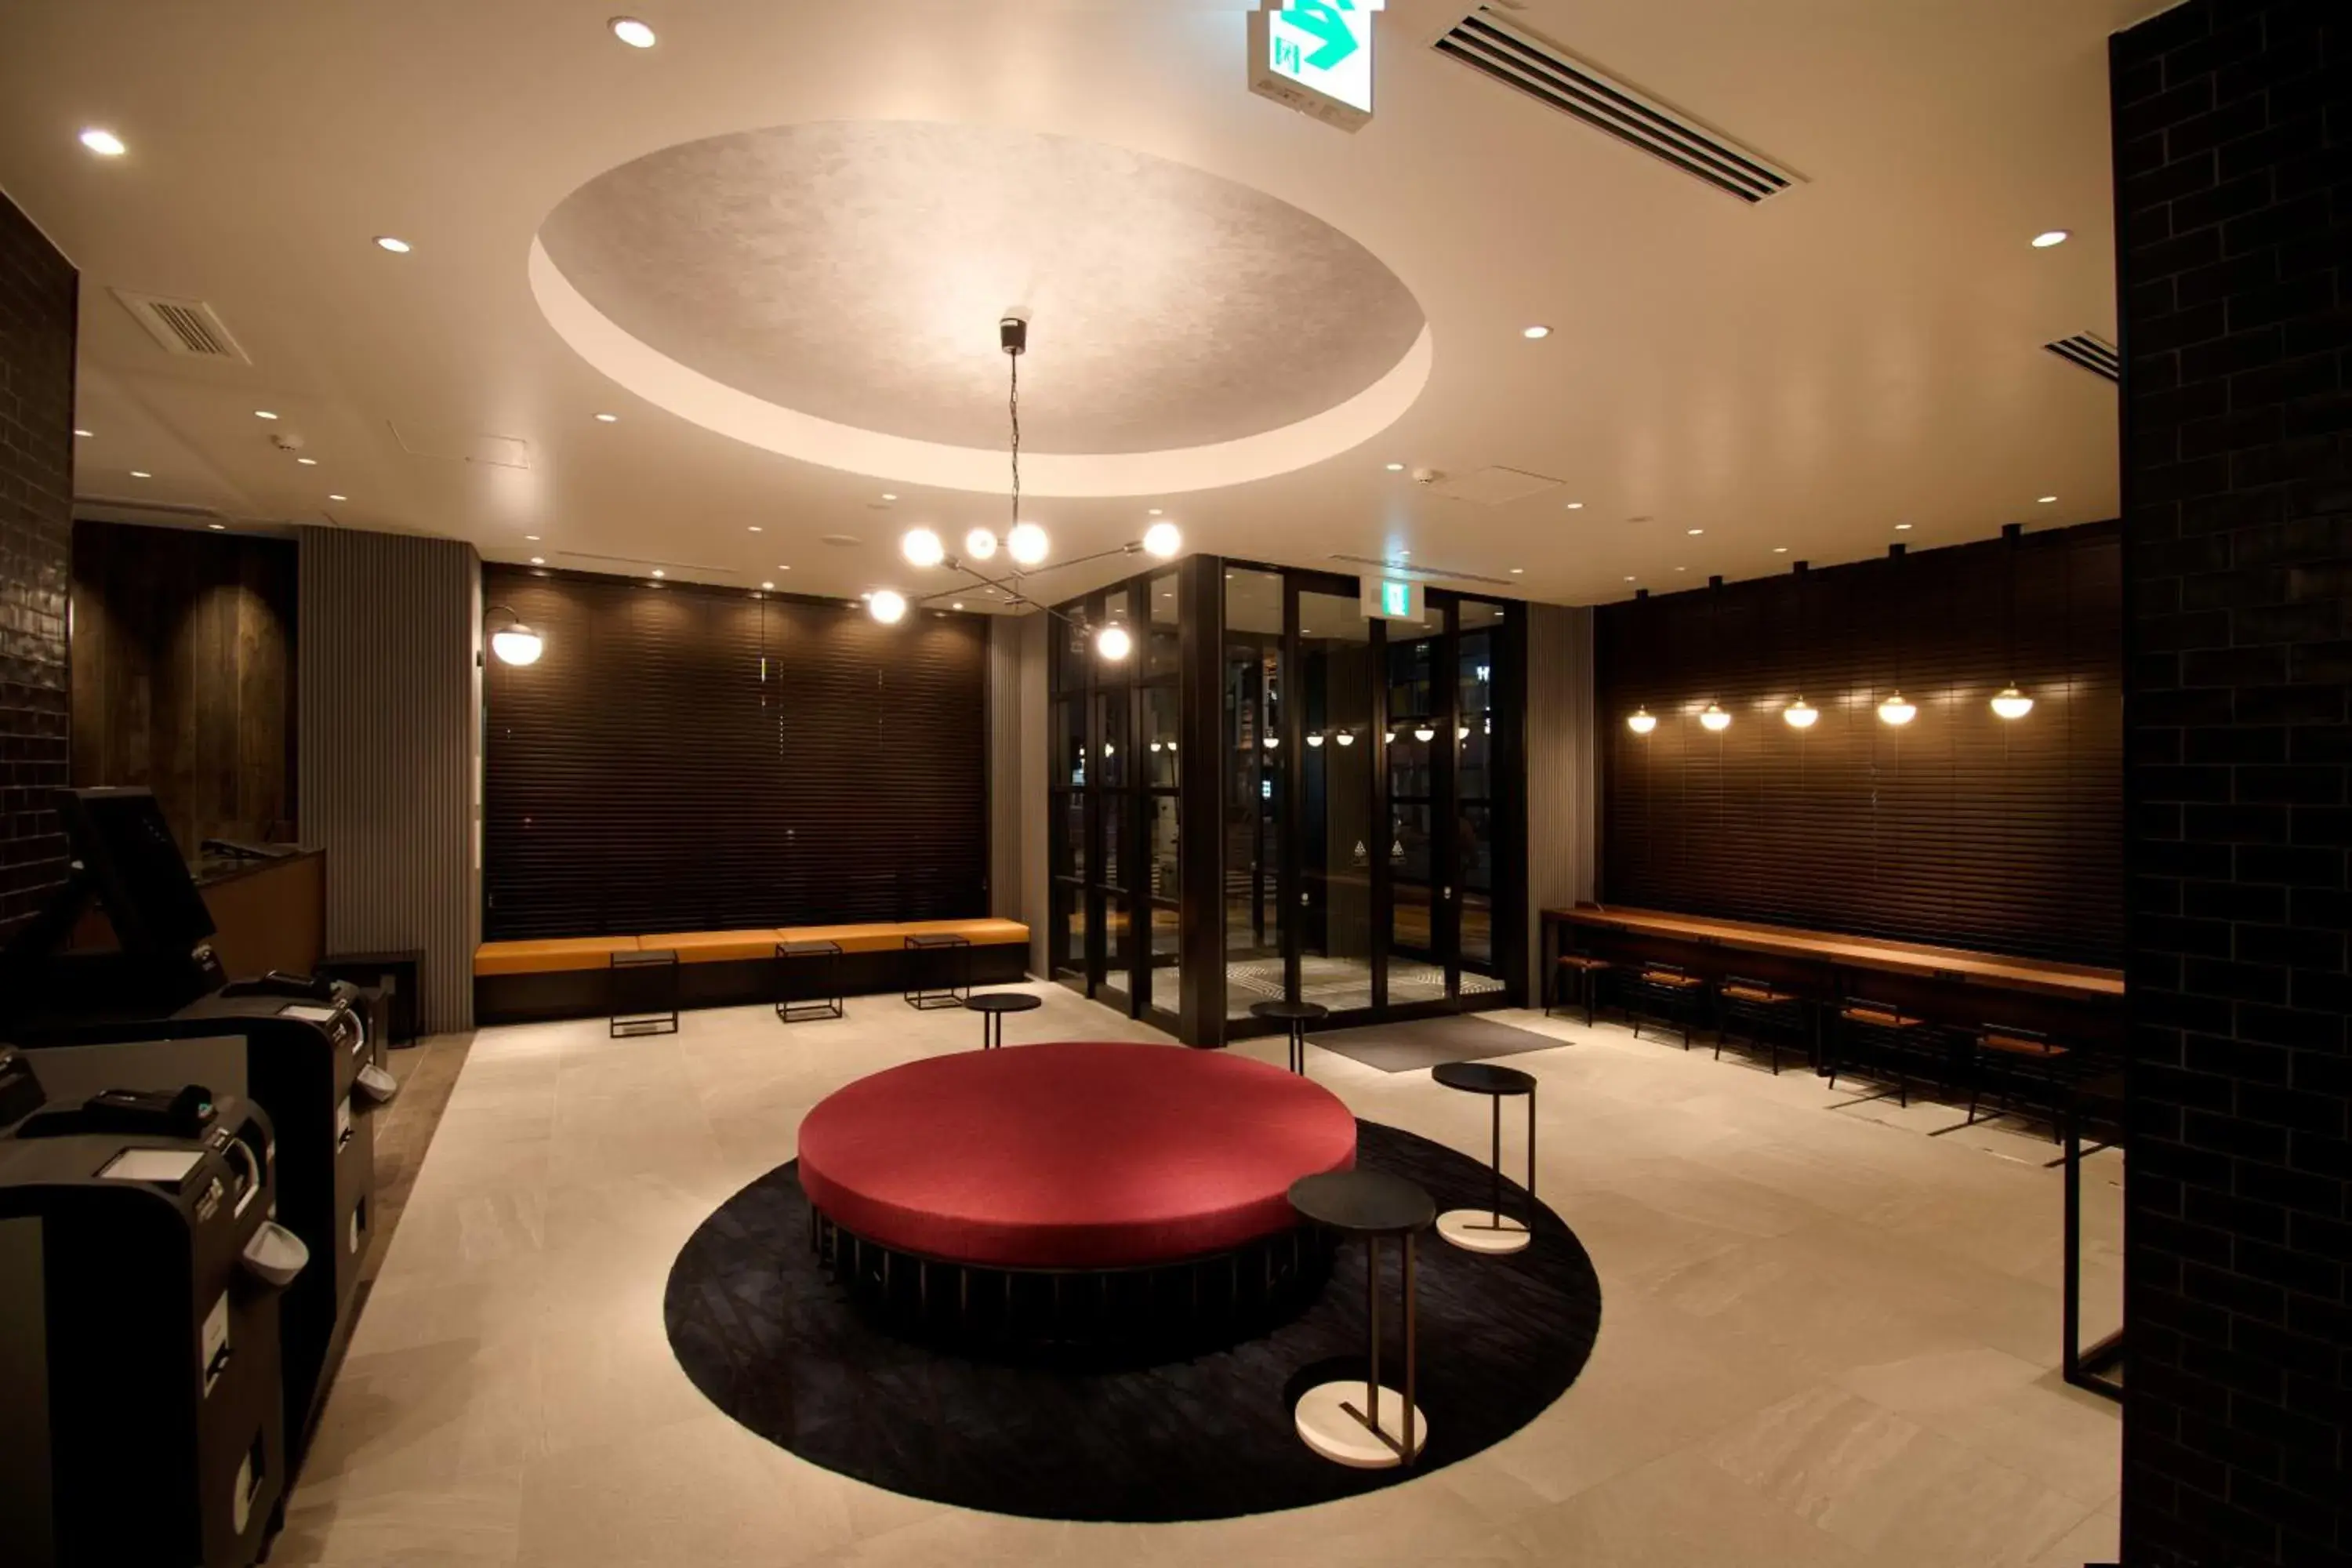 Lobby or reception in Joytel Hotel Shinsekai Sakaisujidori